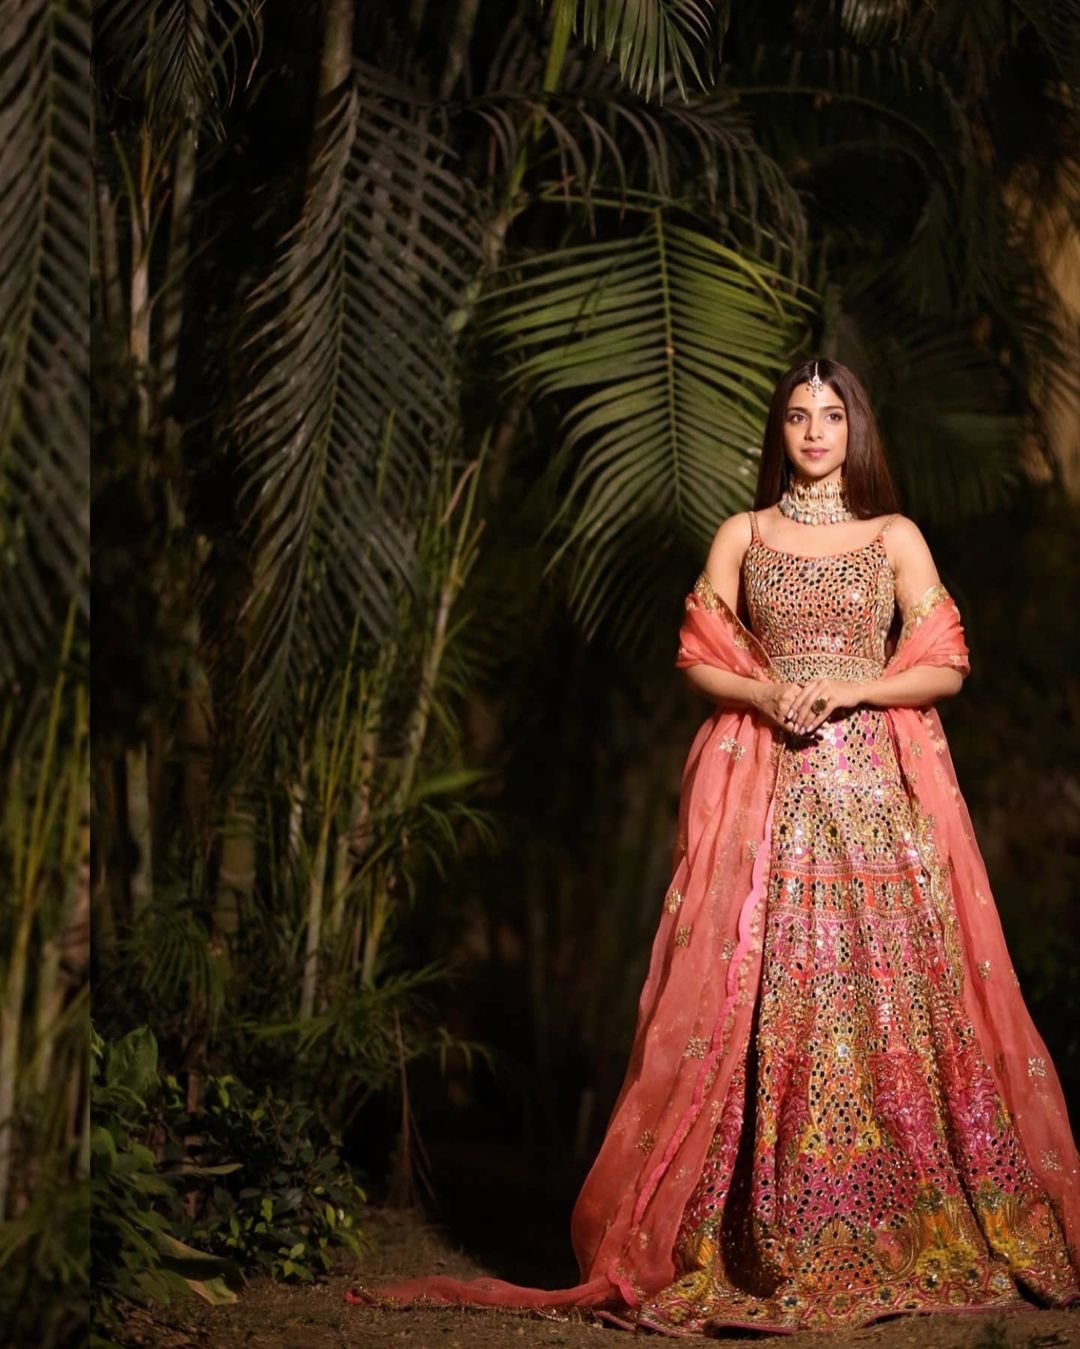 Sonya Hussyn Desi Wedding Vibe in peachy pink is Gorgeous